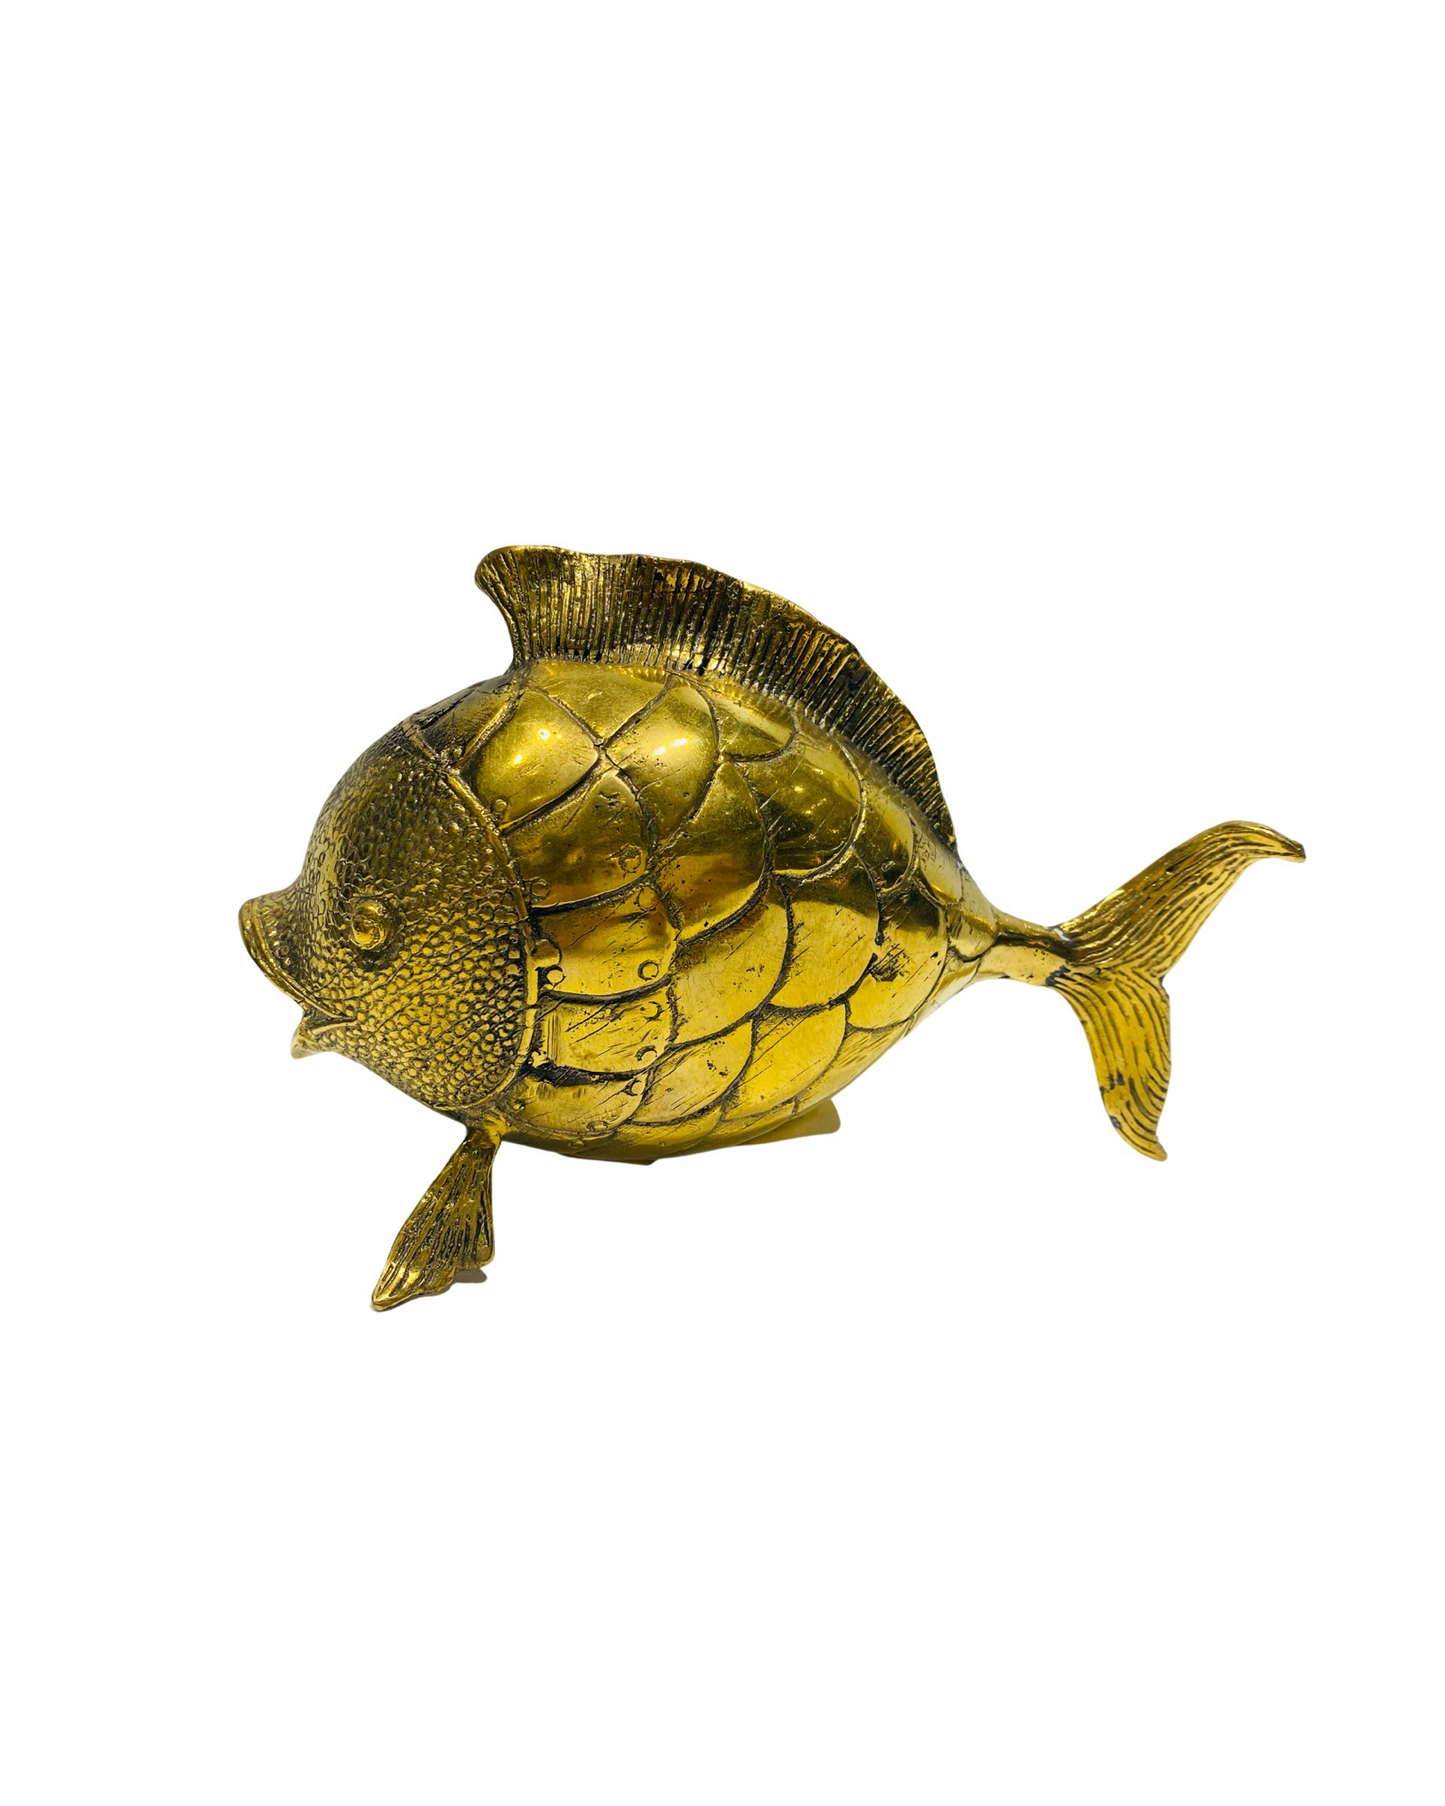 A decorative golf fish made of brass